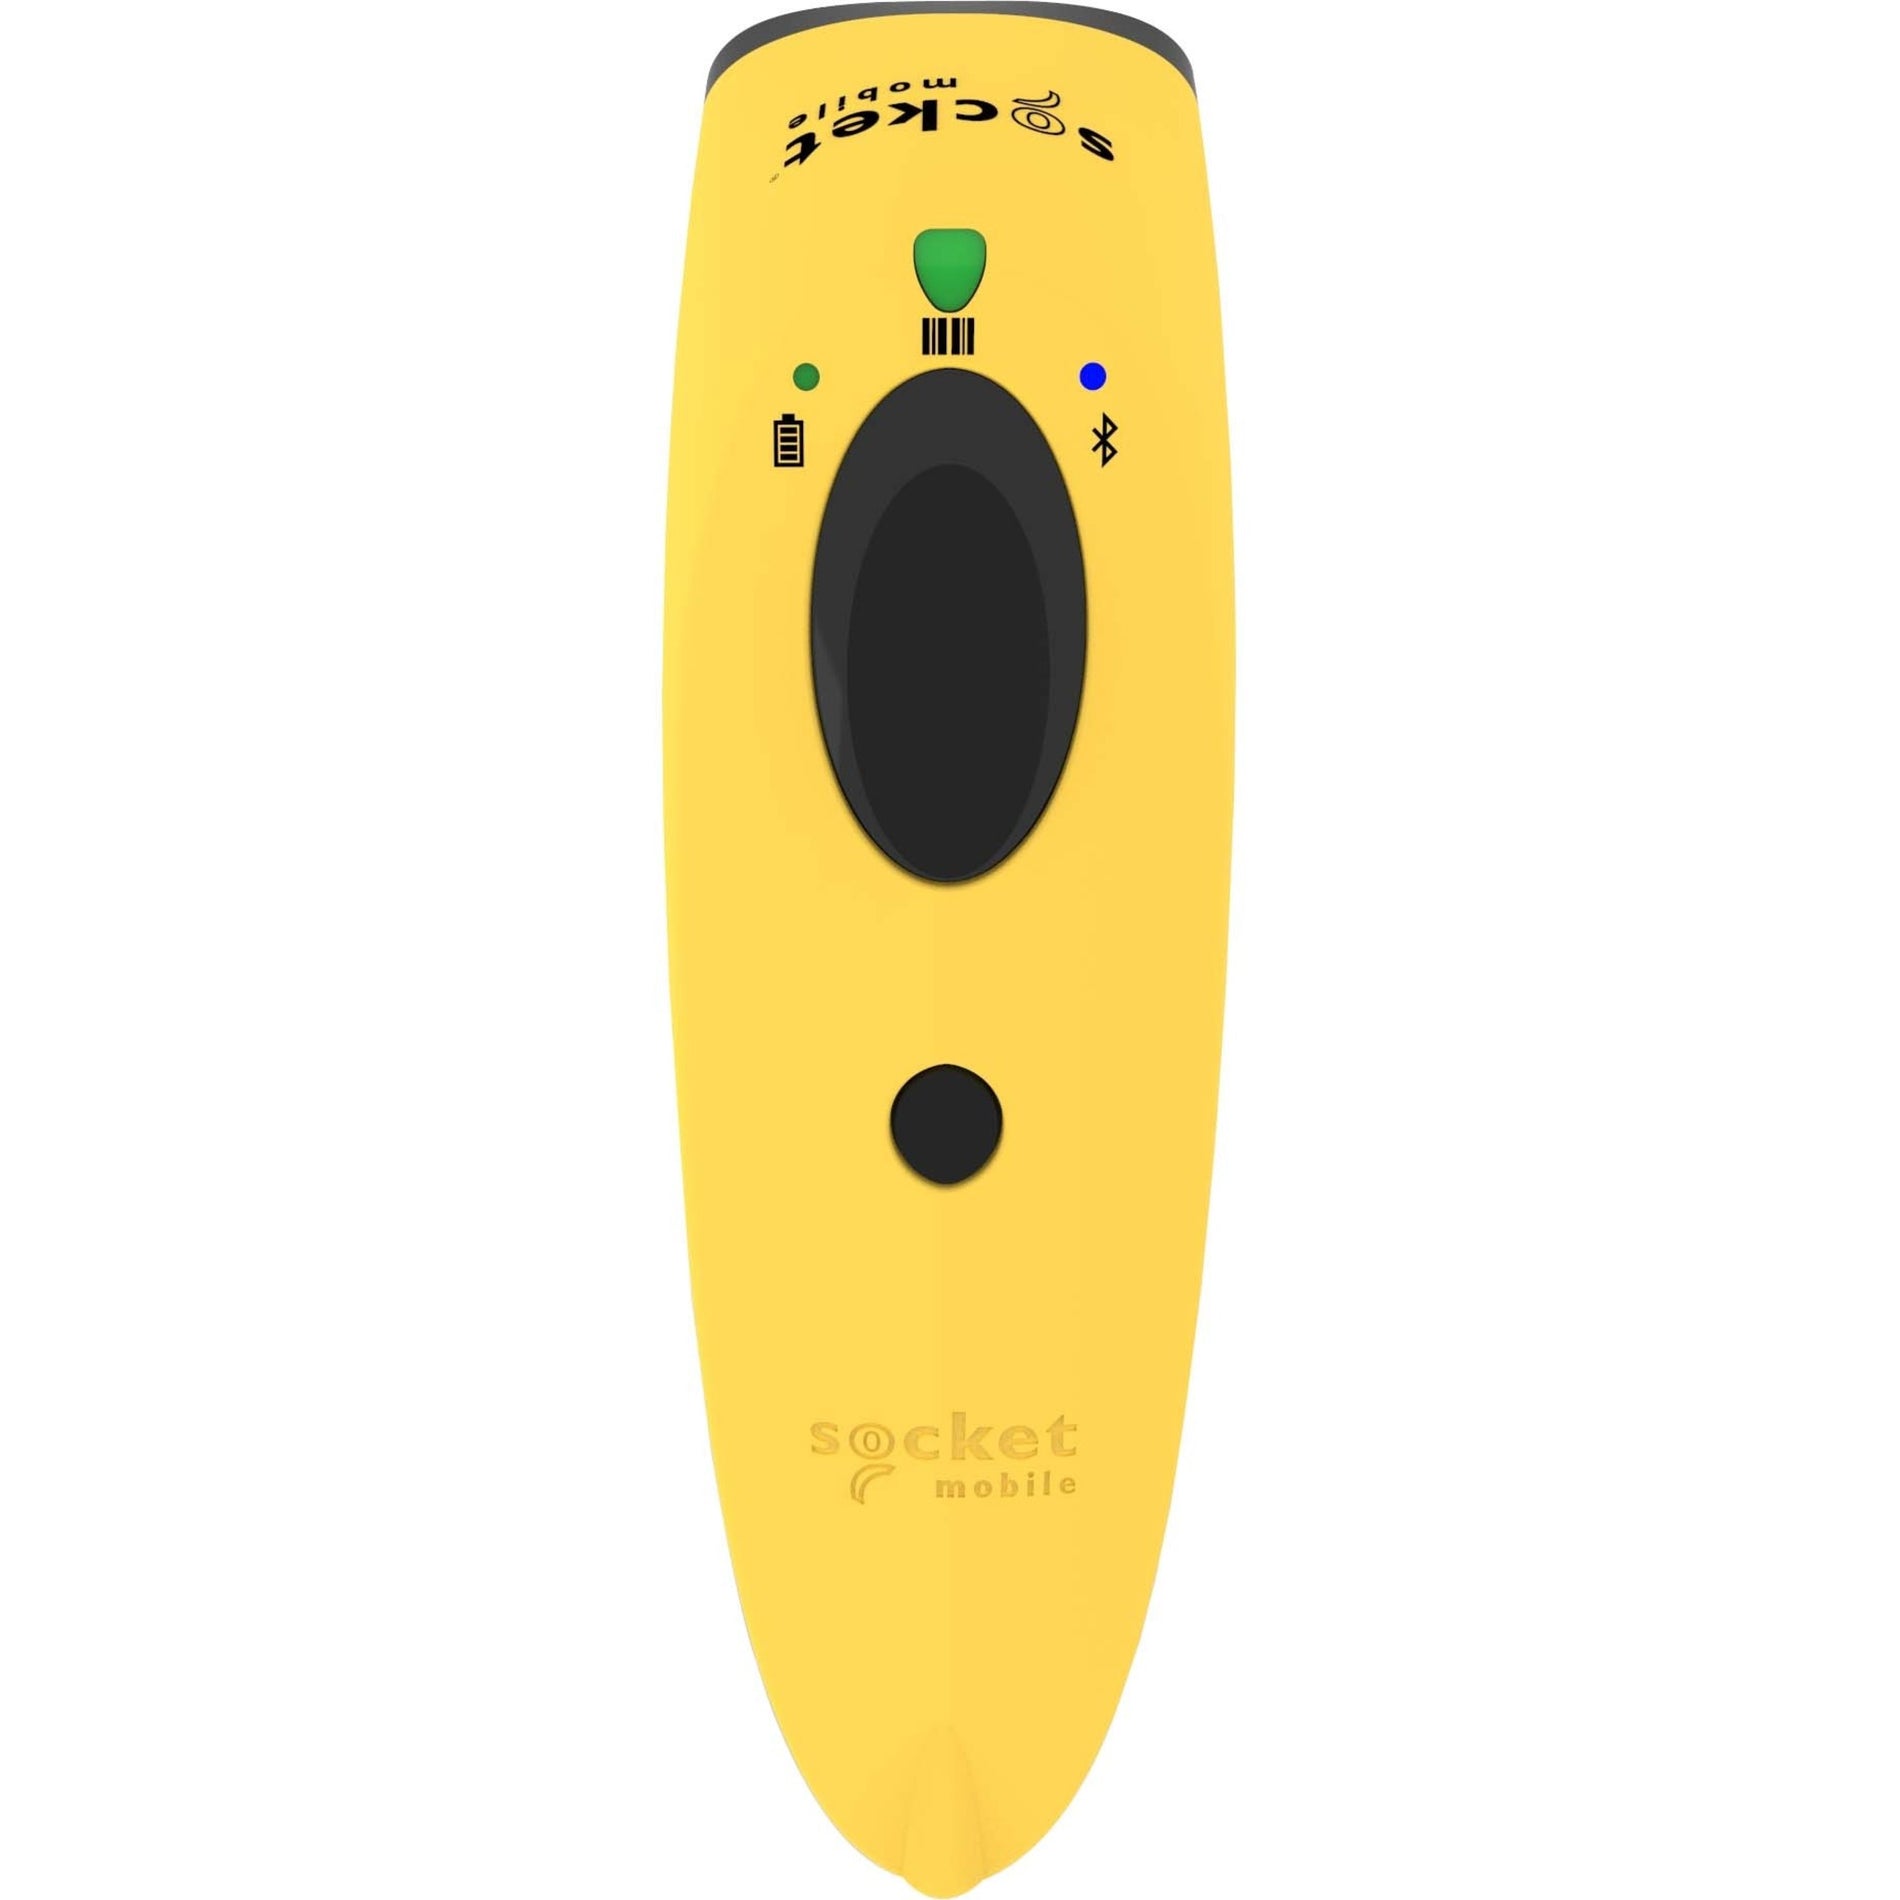 Socket Mobile CX3415-1834 SocketScan S740 Universal Barcode Scanner, Yellow